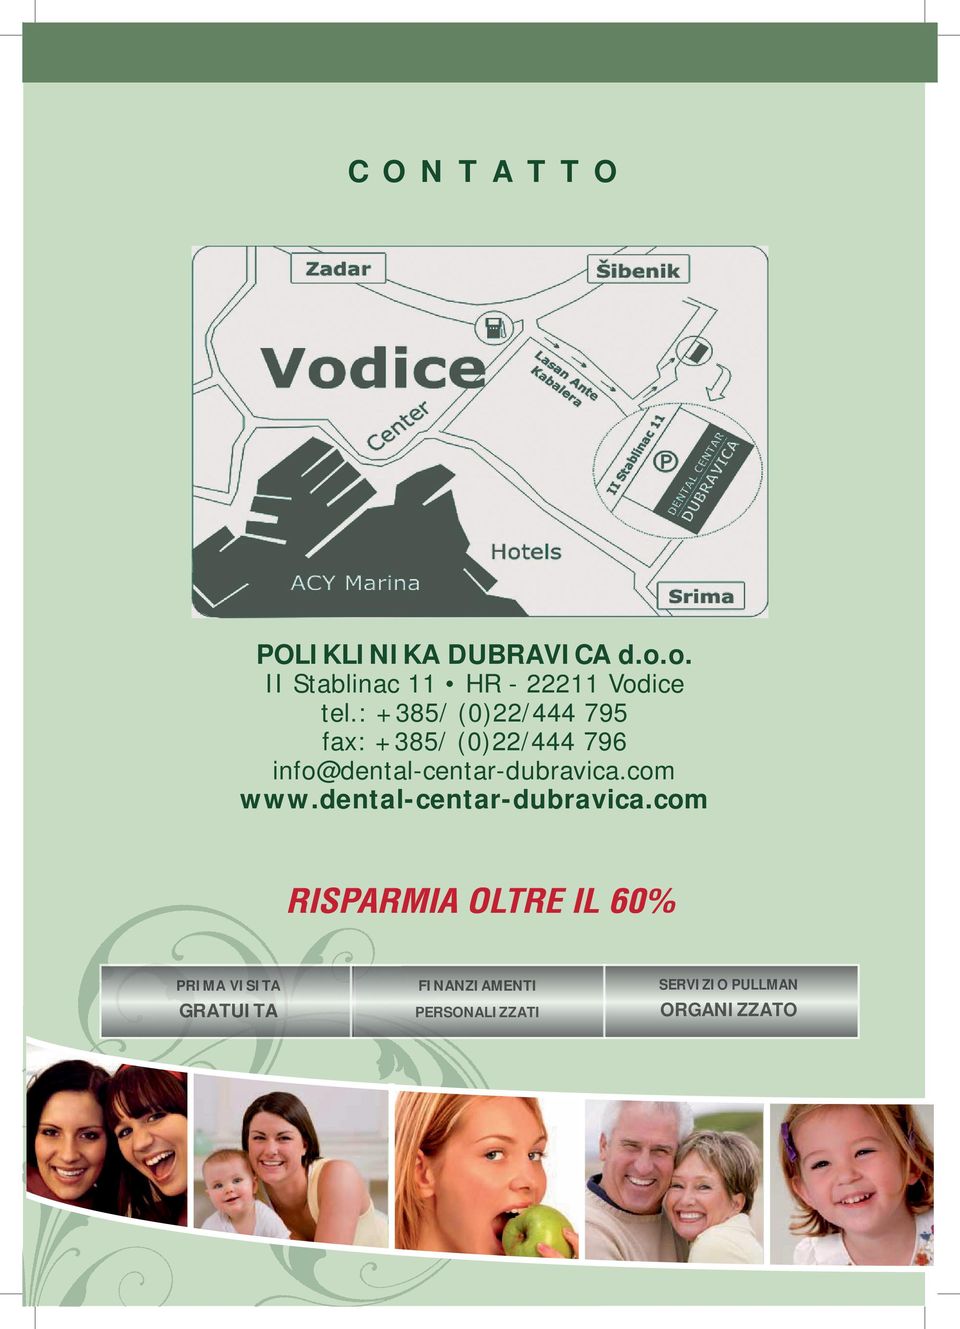 info@dental-centar-dubravica.